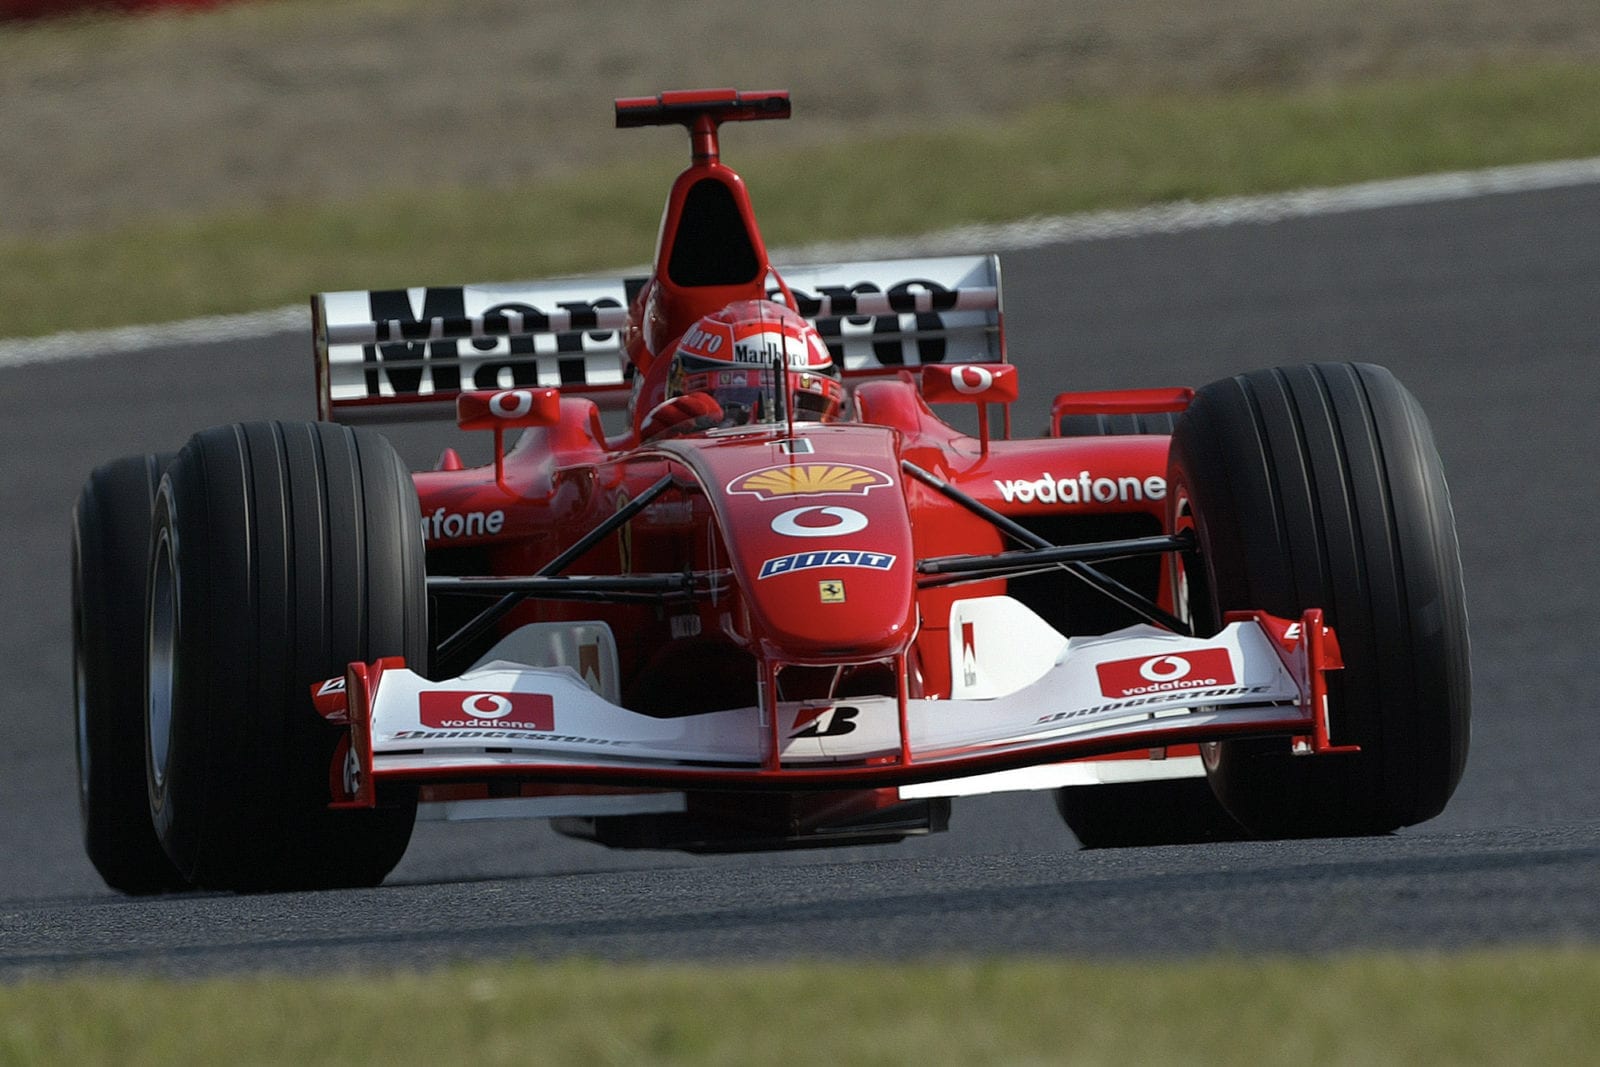 Michael Schumacher in the Ferrari F2002 during the 2002 Japanese Grand Prix